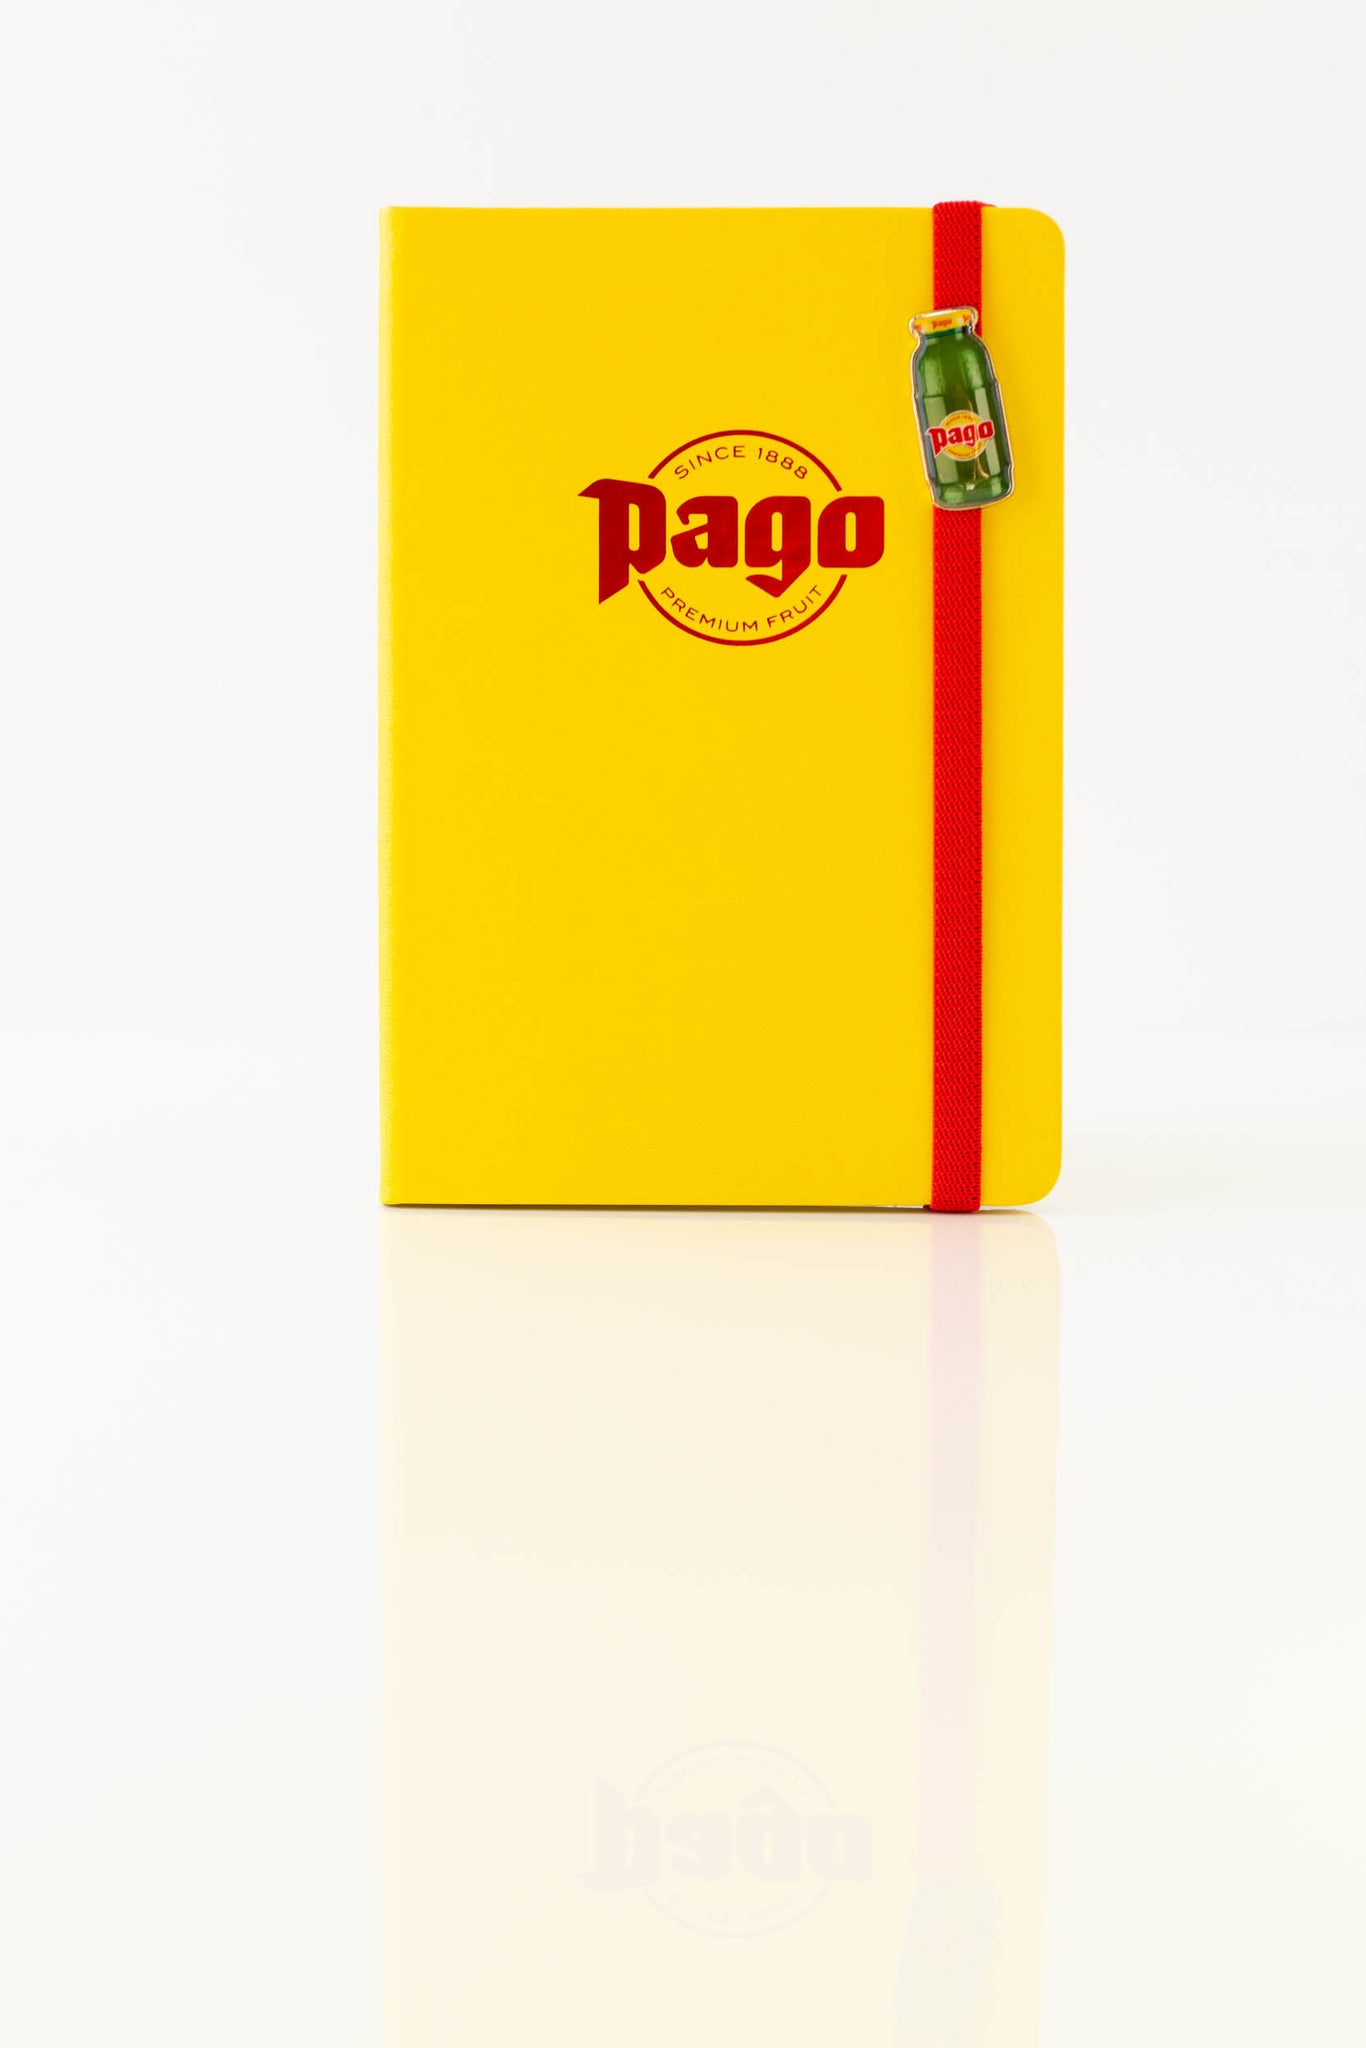 Pago Notebook - Pago Premium Fruit Juice Store